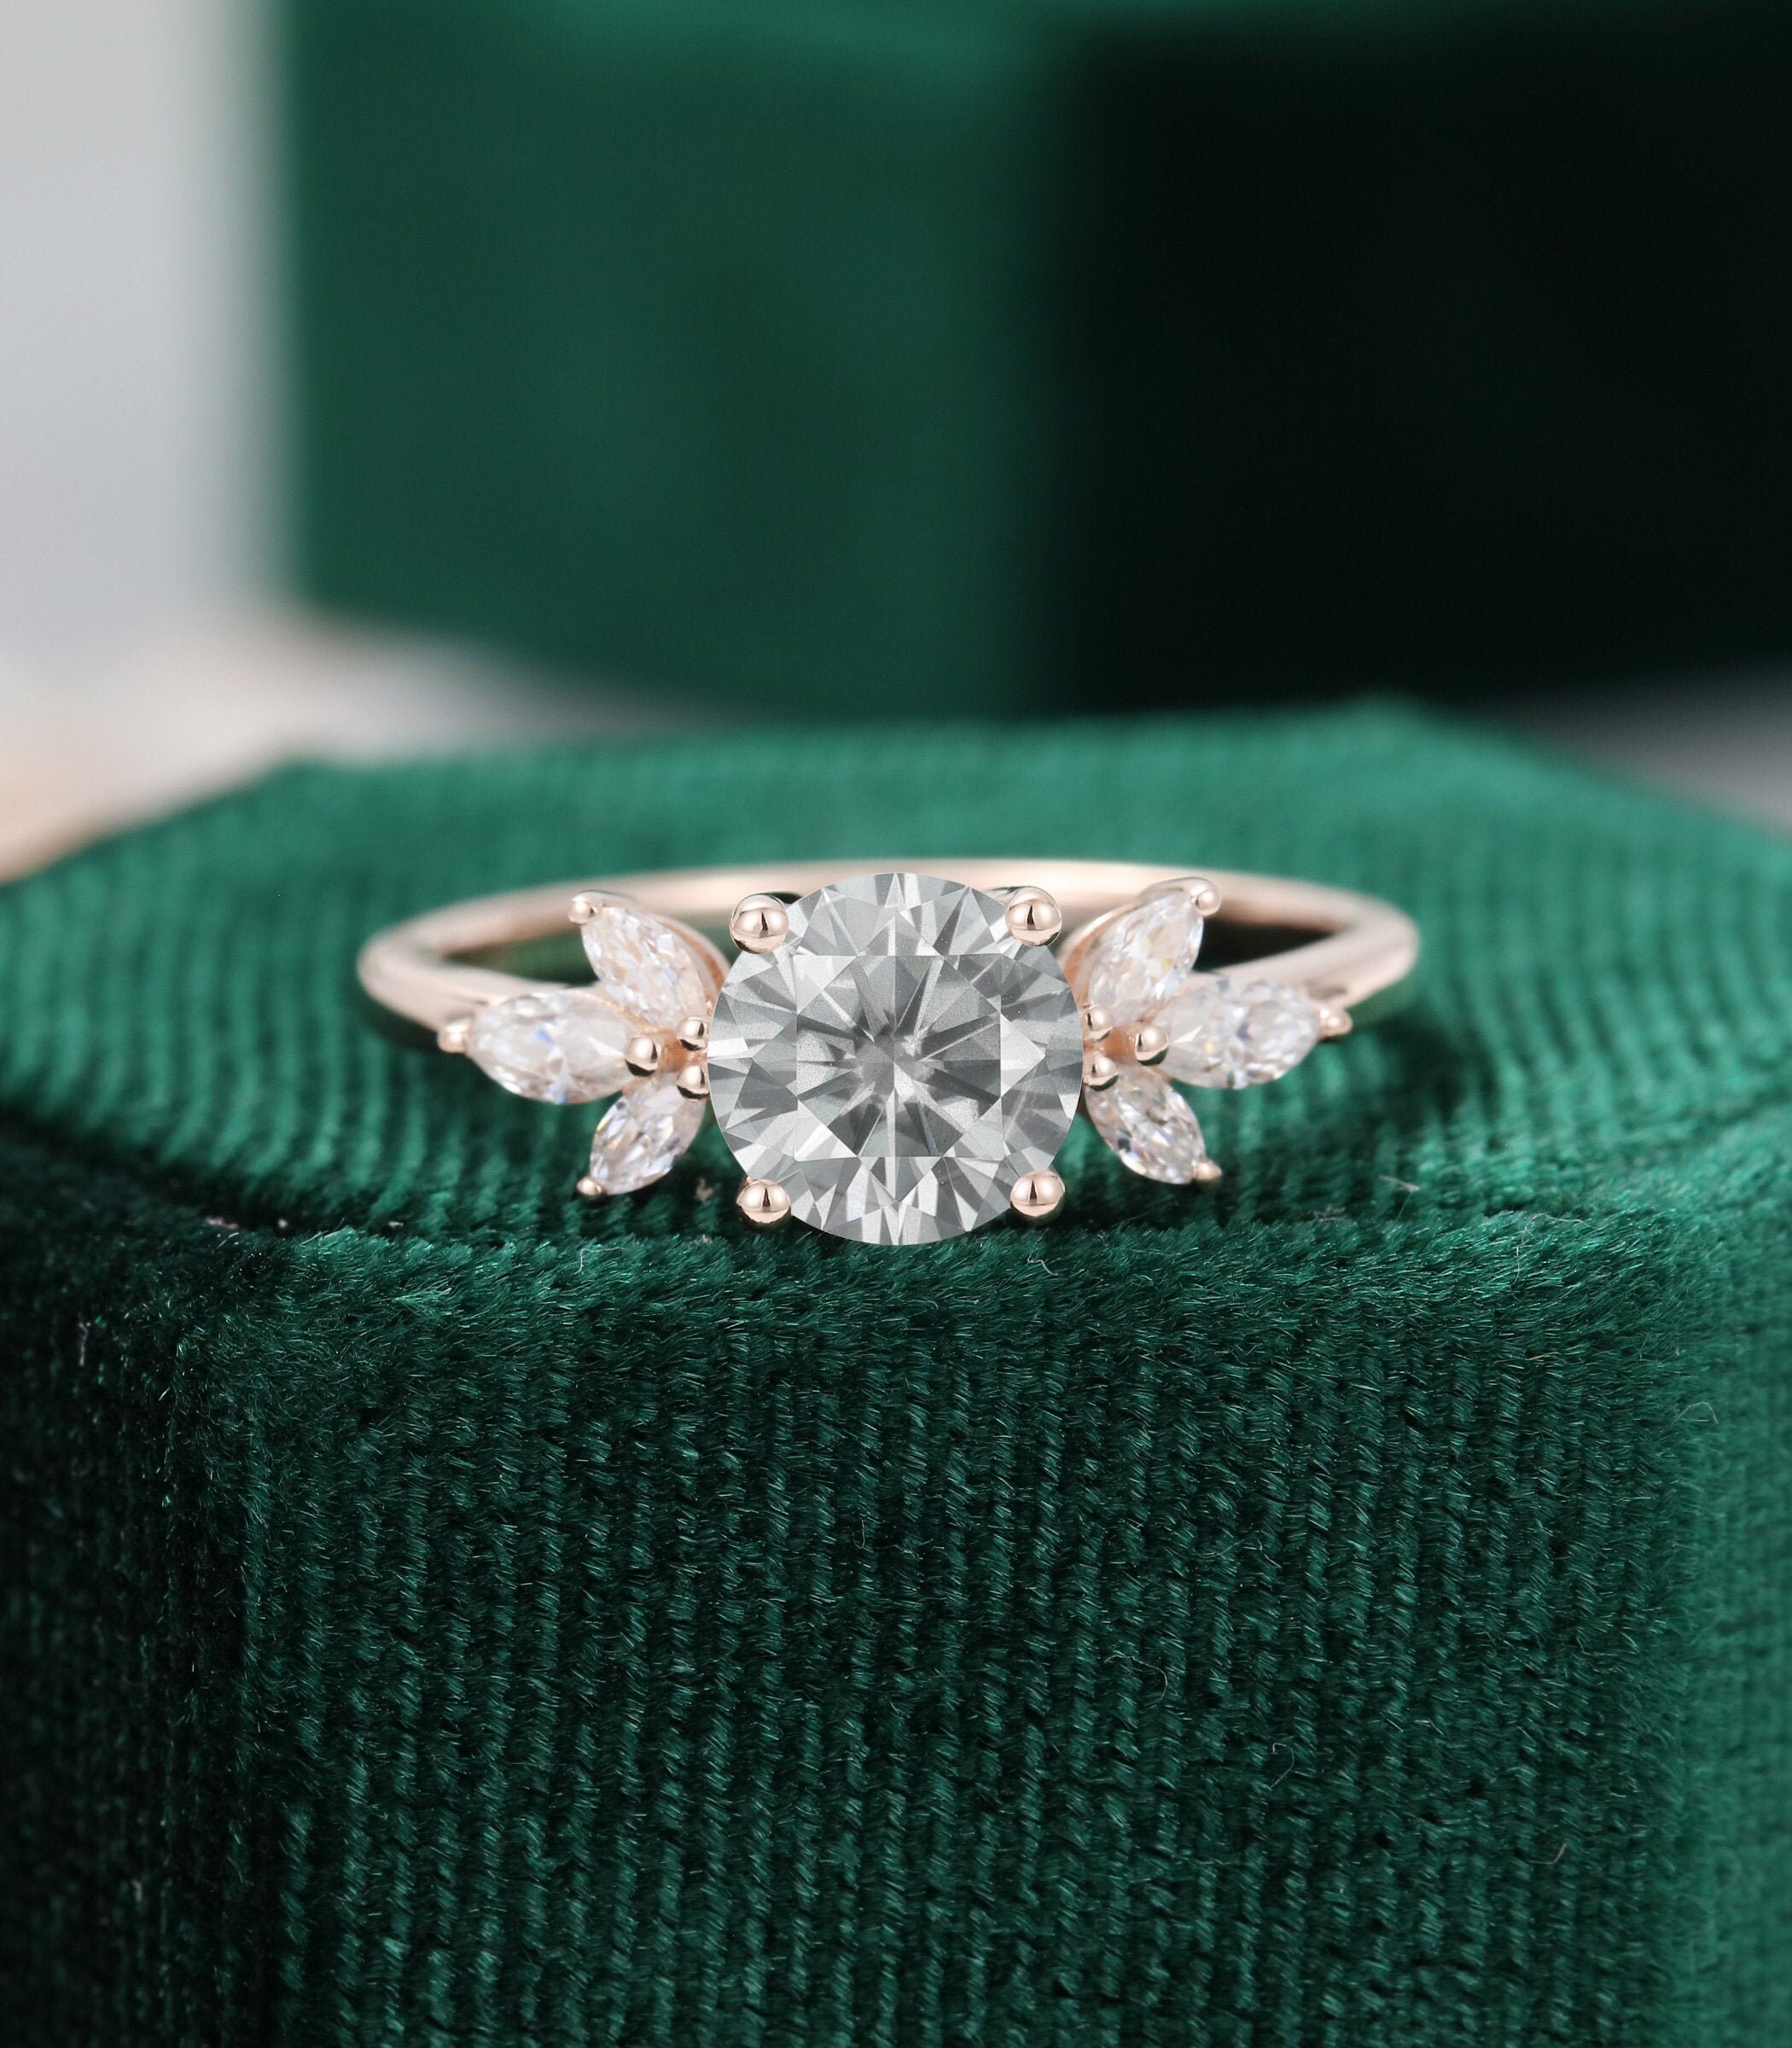 Gray Moissanite engagement ring Unique Marquise cut diamond | Etsy